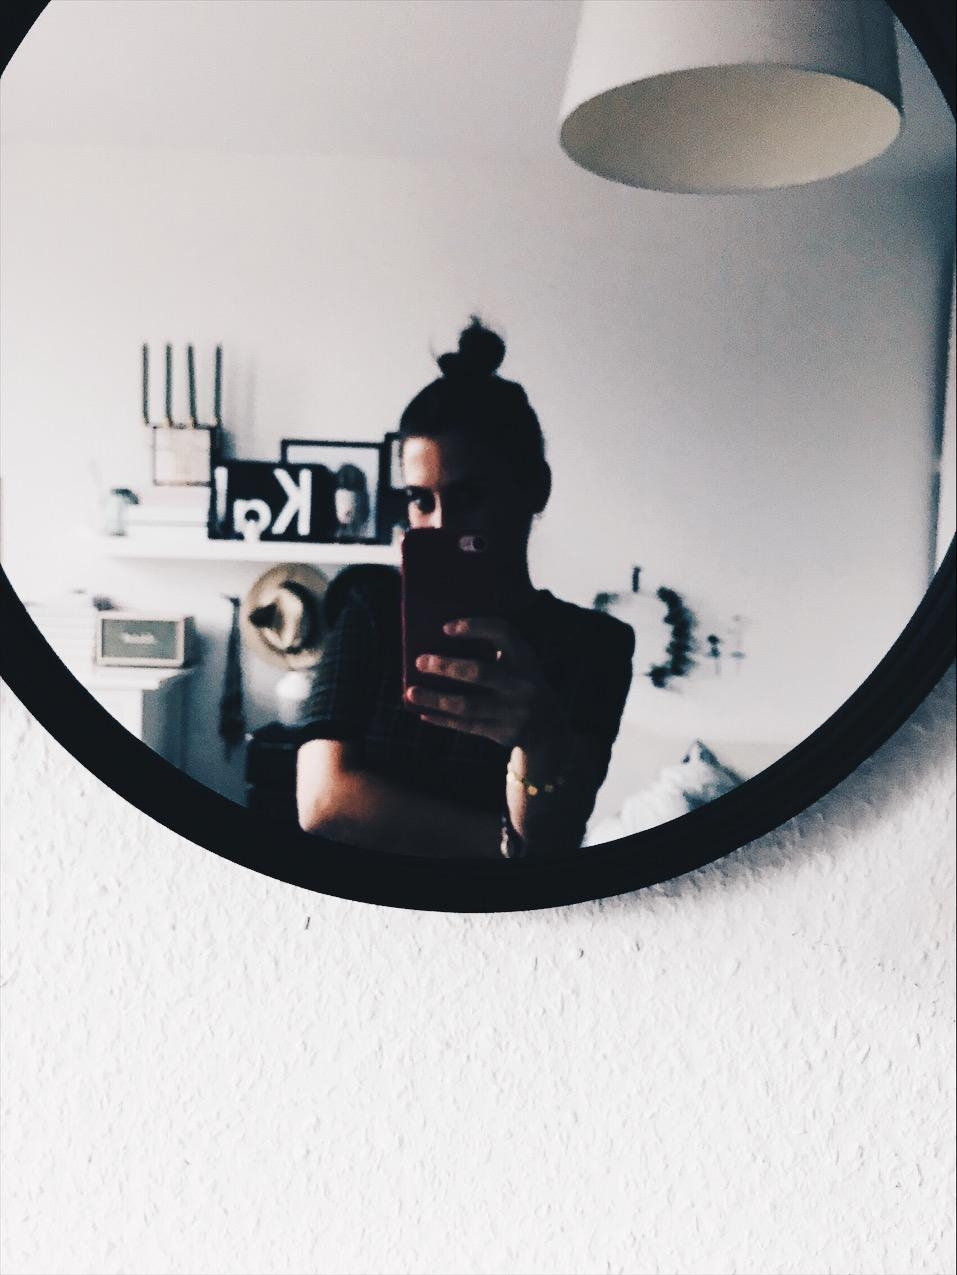 hey! 
#spiegel #selfie #bedroom# interior #dekoliebe #detail #couchliebt 